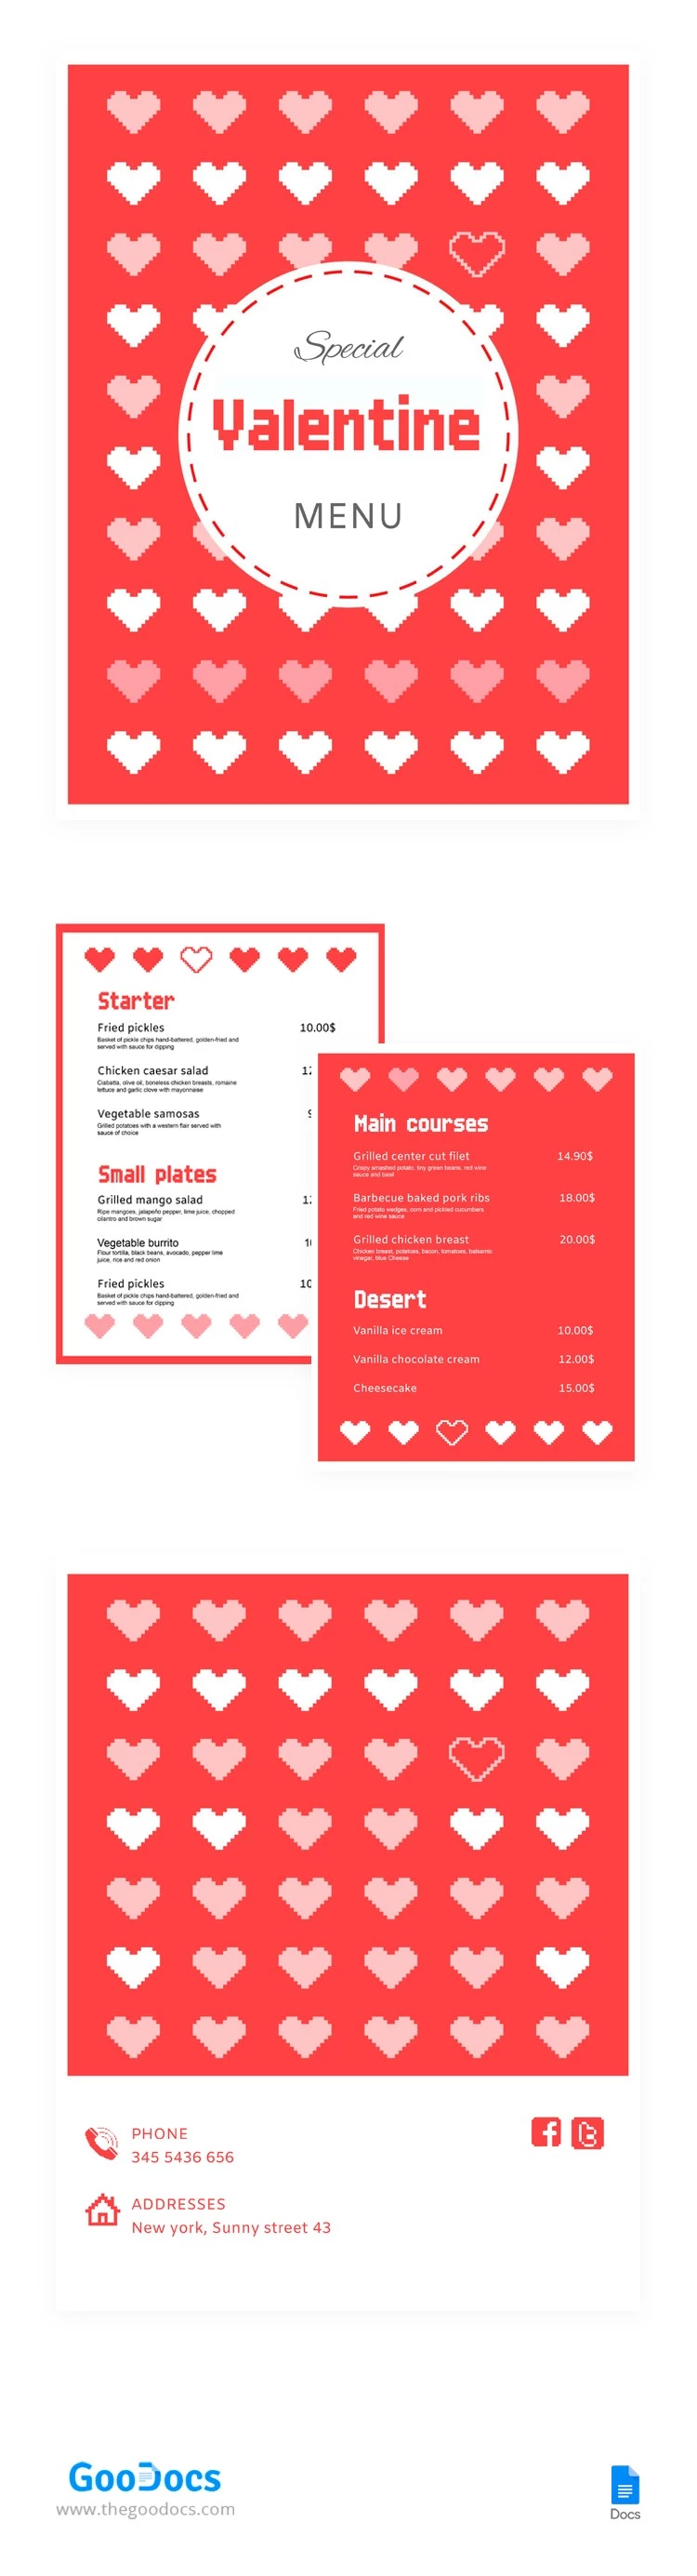 Menu di San Valentino di Pixel - free Google Docs Template - 10062892